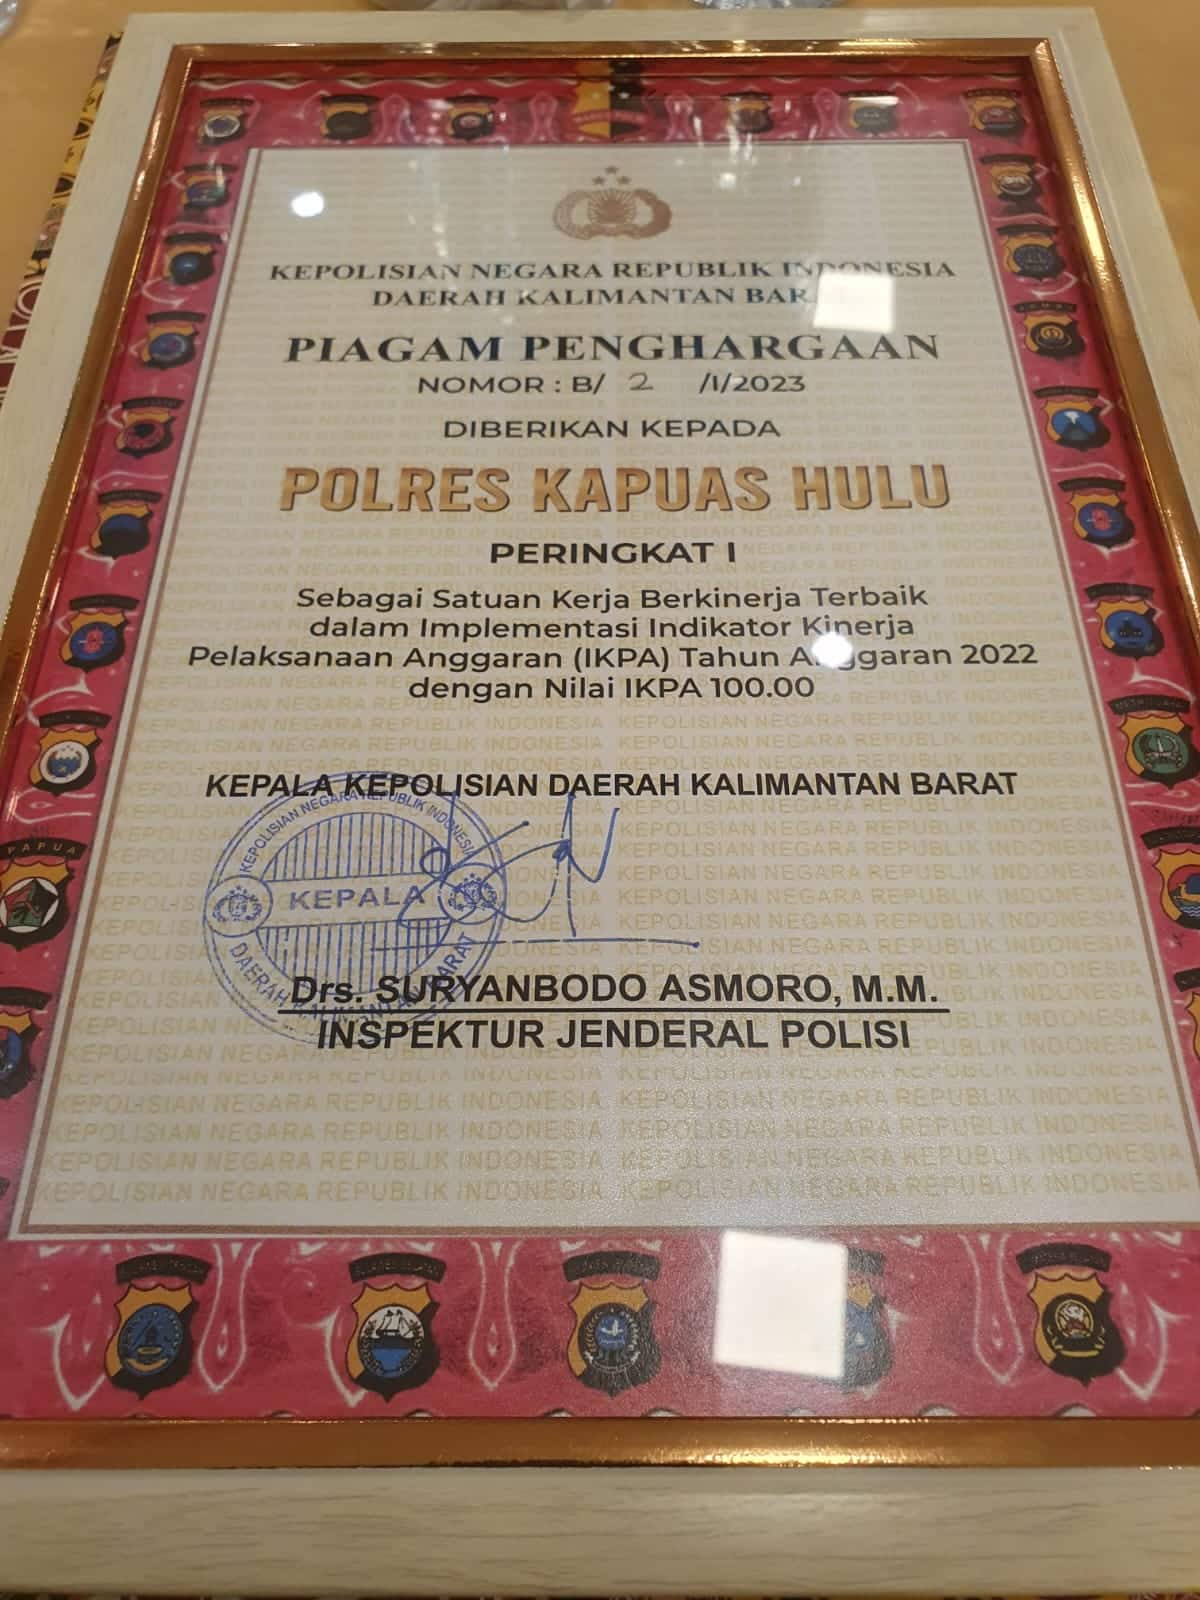 Piagam penghargaan Polres Kapuas Hulu untuk peringkat pertama dalam Indikator Kinerja Pelaksanaan Anggaran (IKPA) tahun 2022. (Foto: Ishaq)